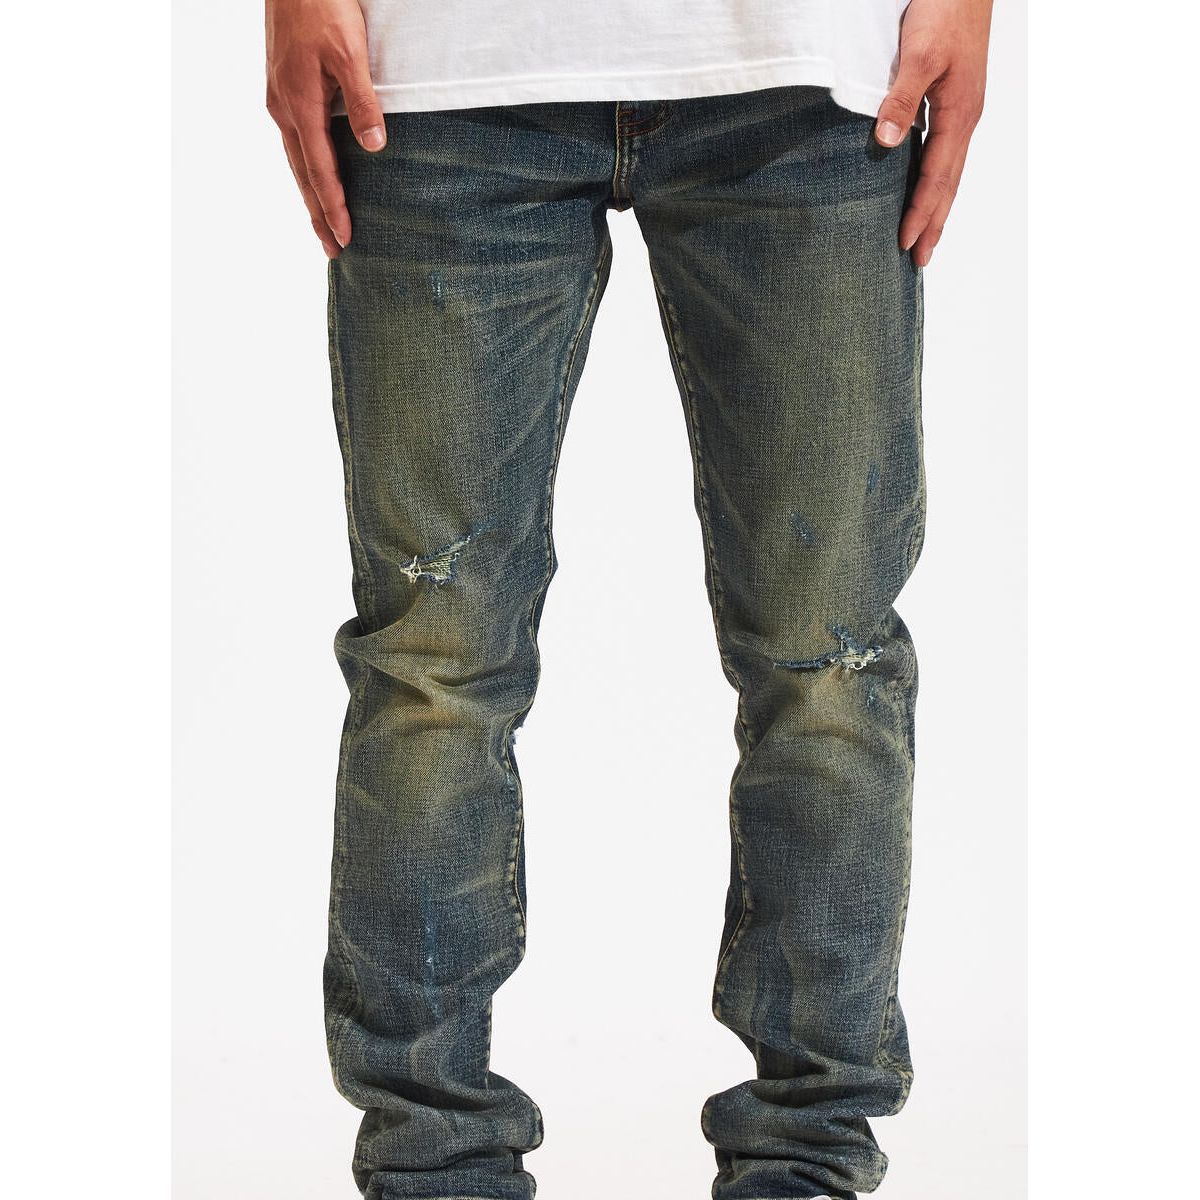 Crysp Denim Atlantic Indigo Denim Jeans (CRYSPHOL23-19)